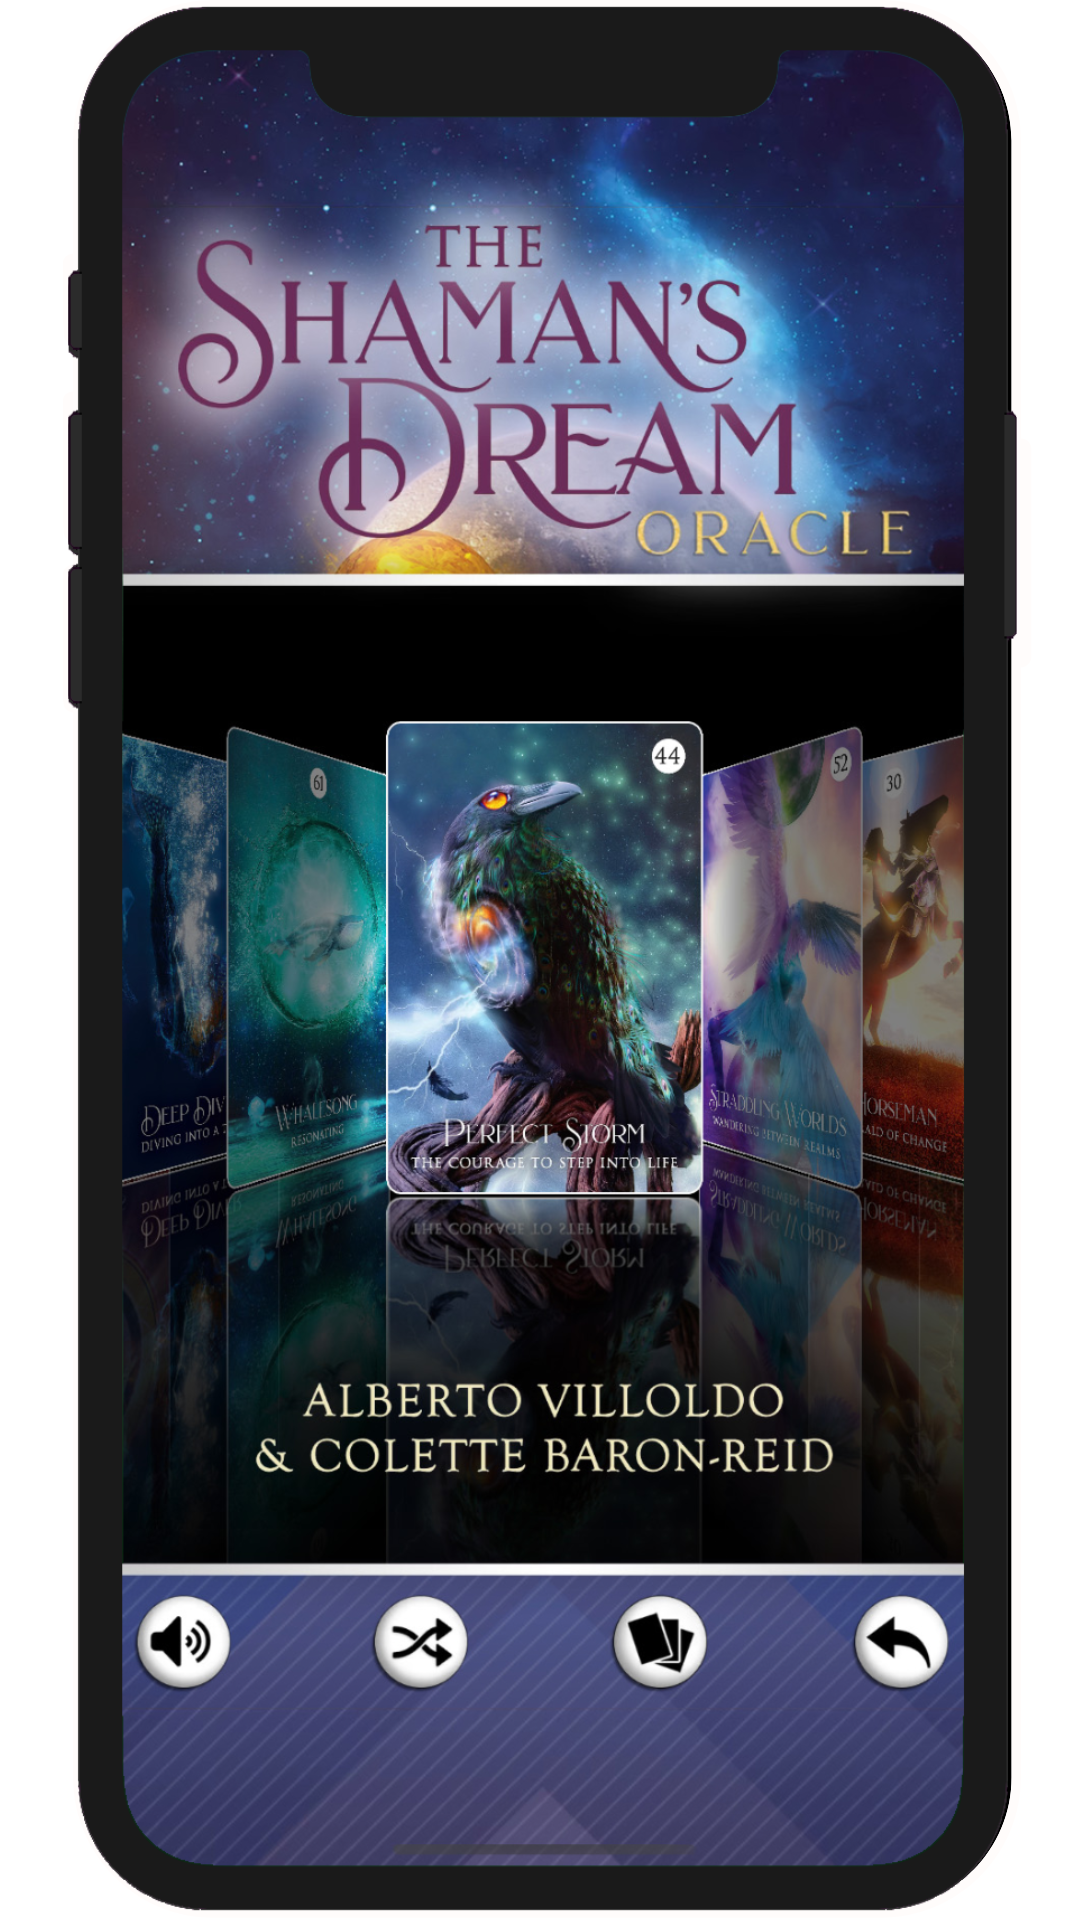 The Shaman’s Dream Oracle app by Colette Baron-Reid